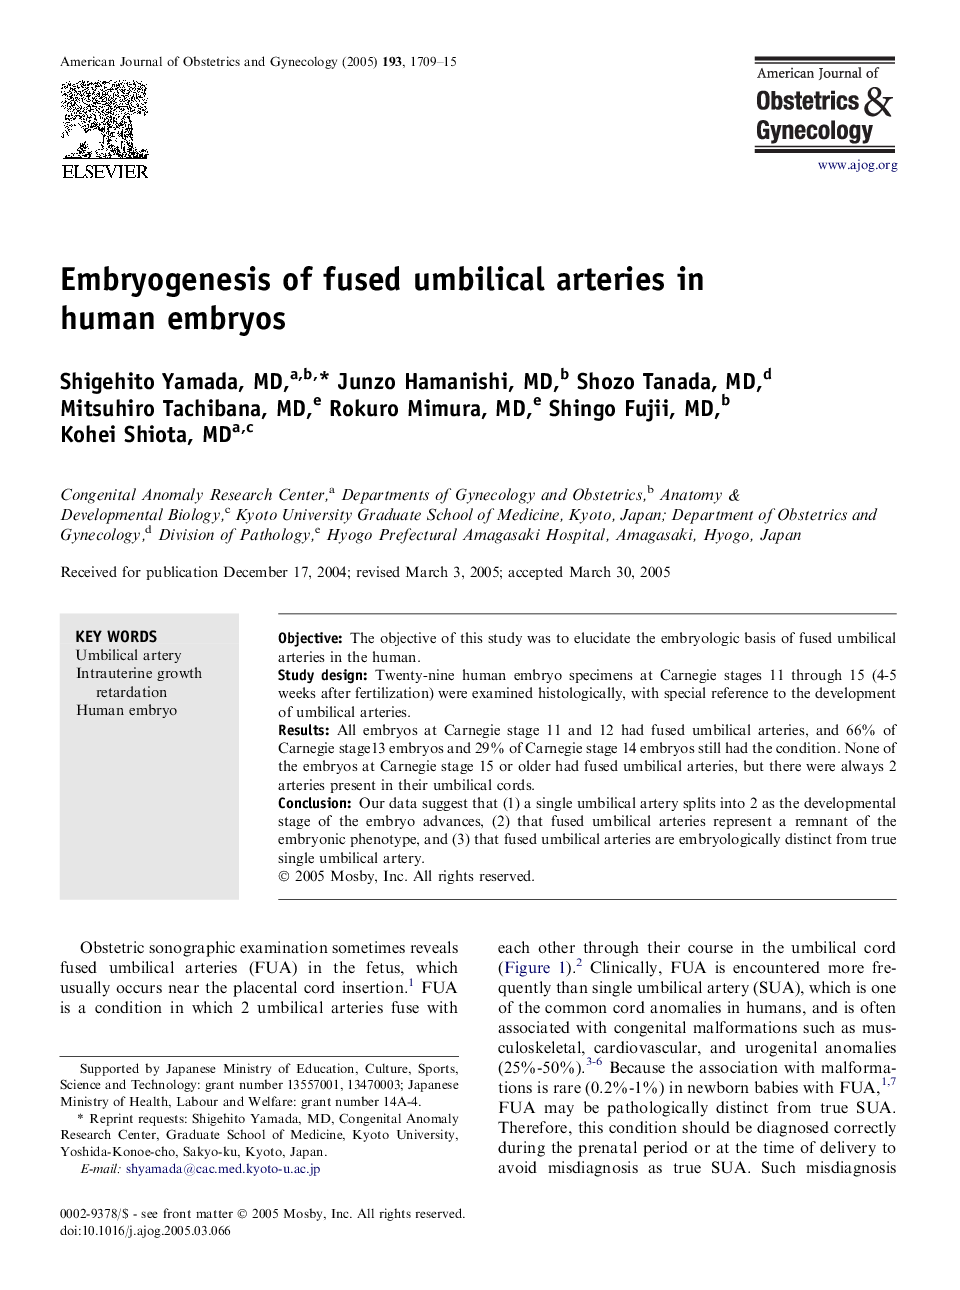 Embryogenesis of fused umbilical arteries in human embryos